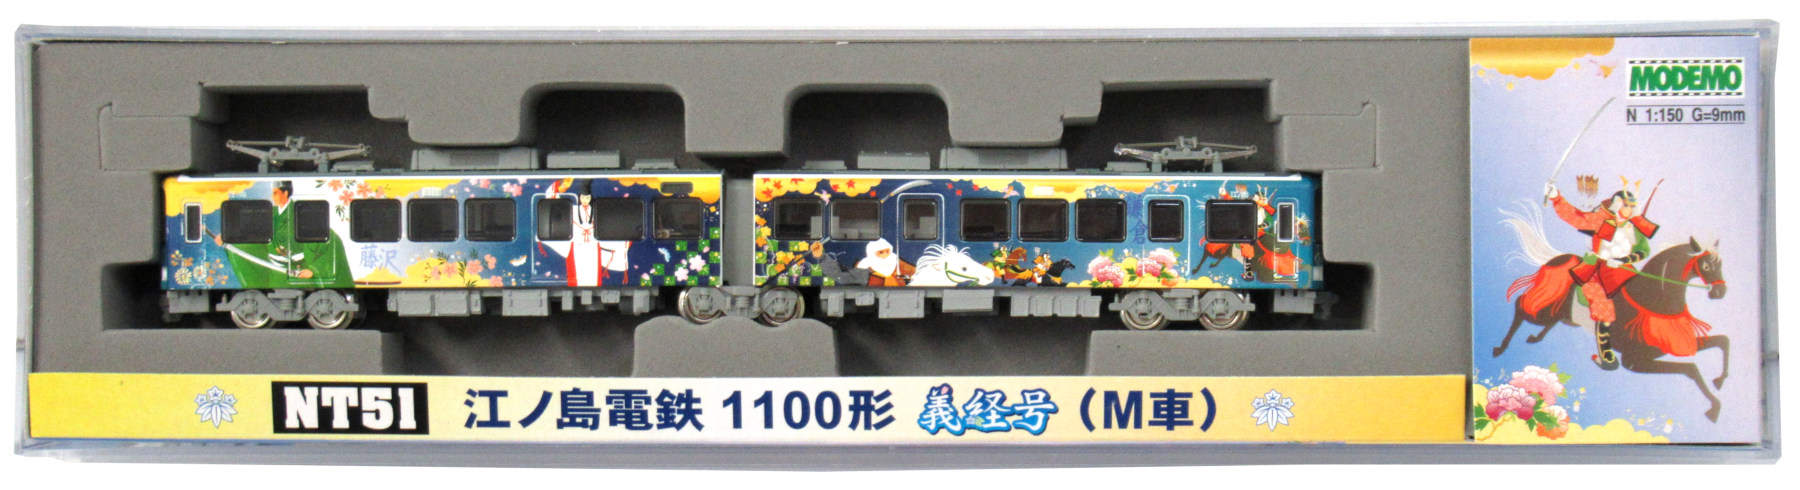 NT51 江ノ島電鉄1100形 義経号(M車)